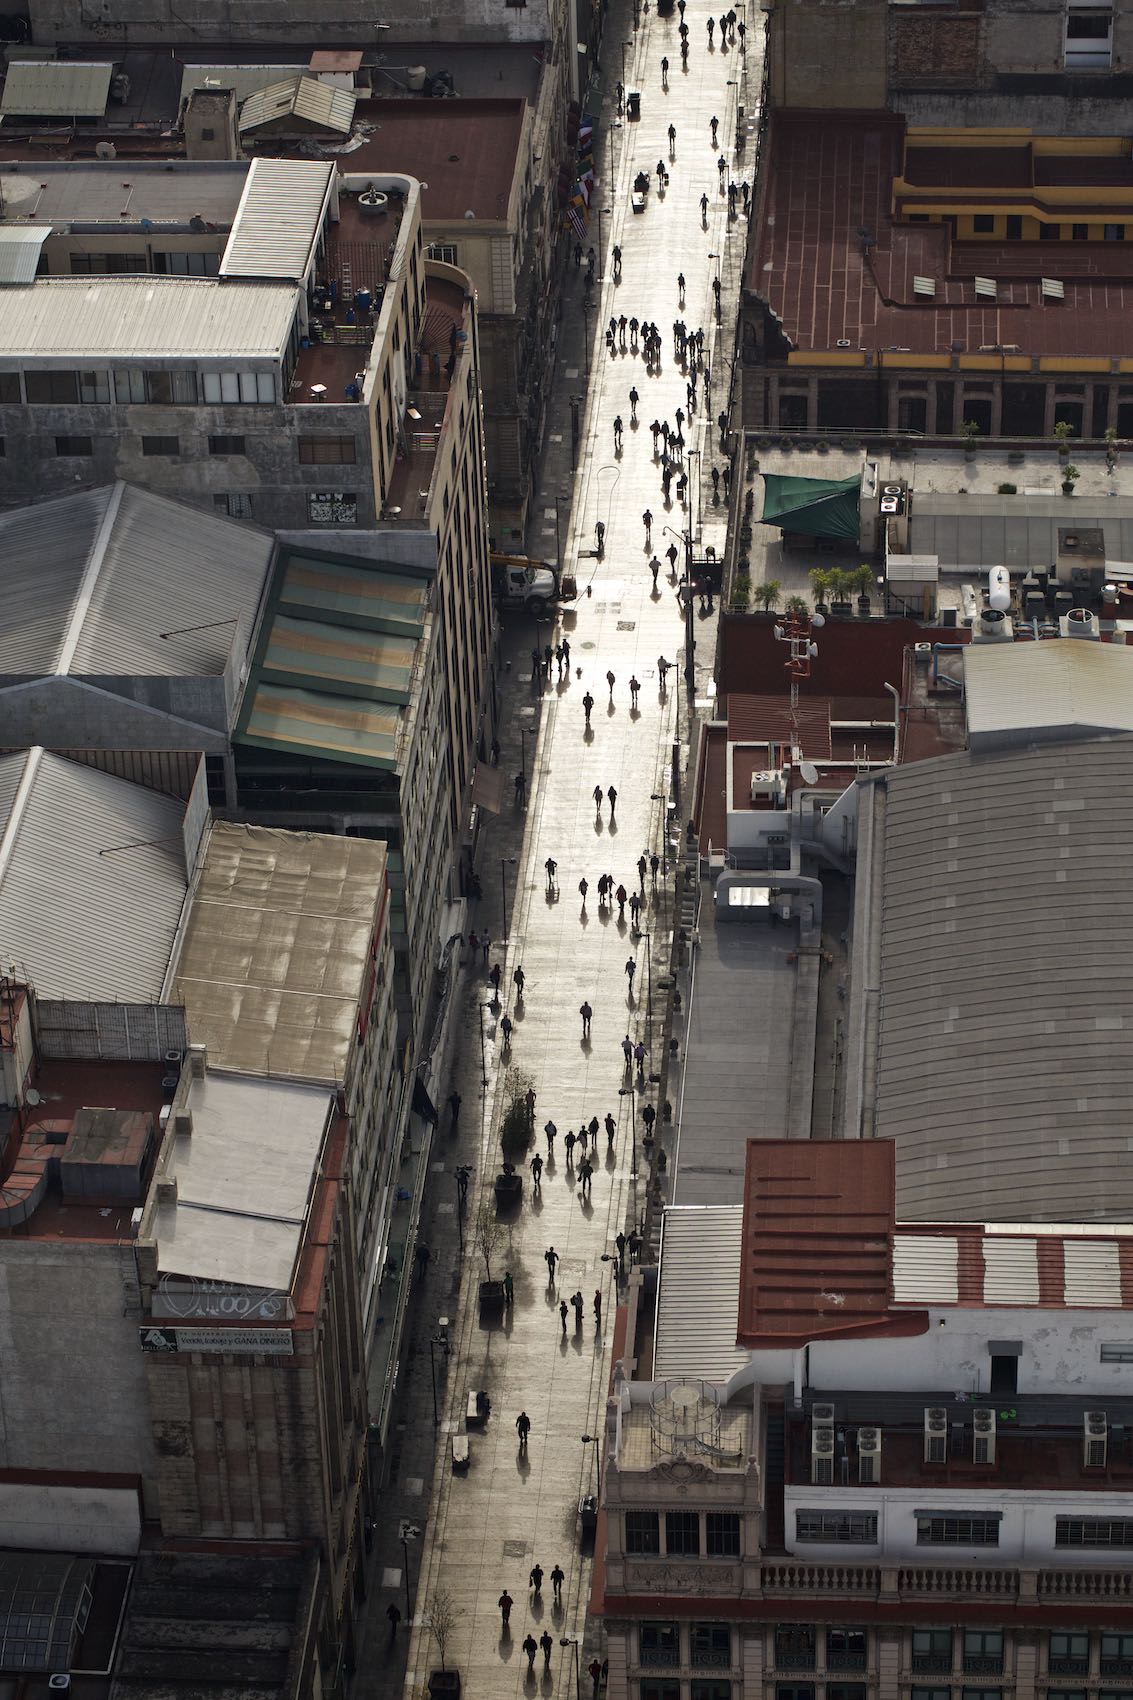 Jody Horton Photography - Pedestrian street scene in Mexico City.